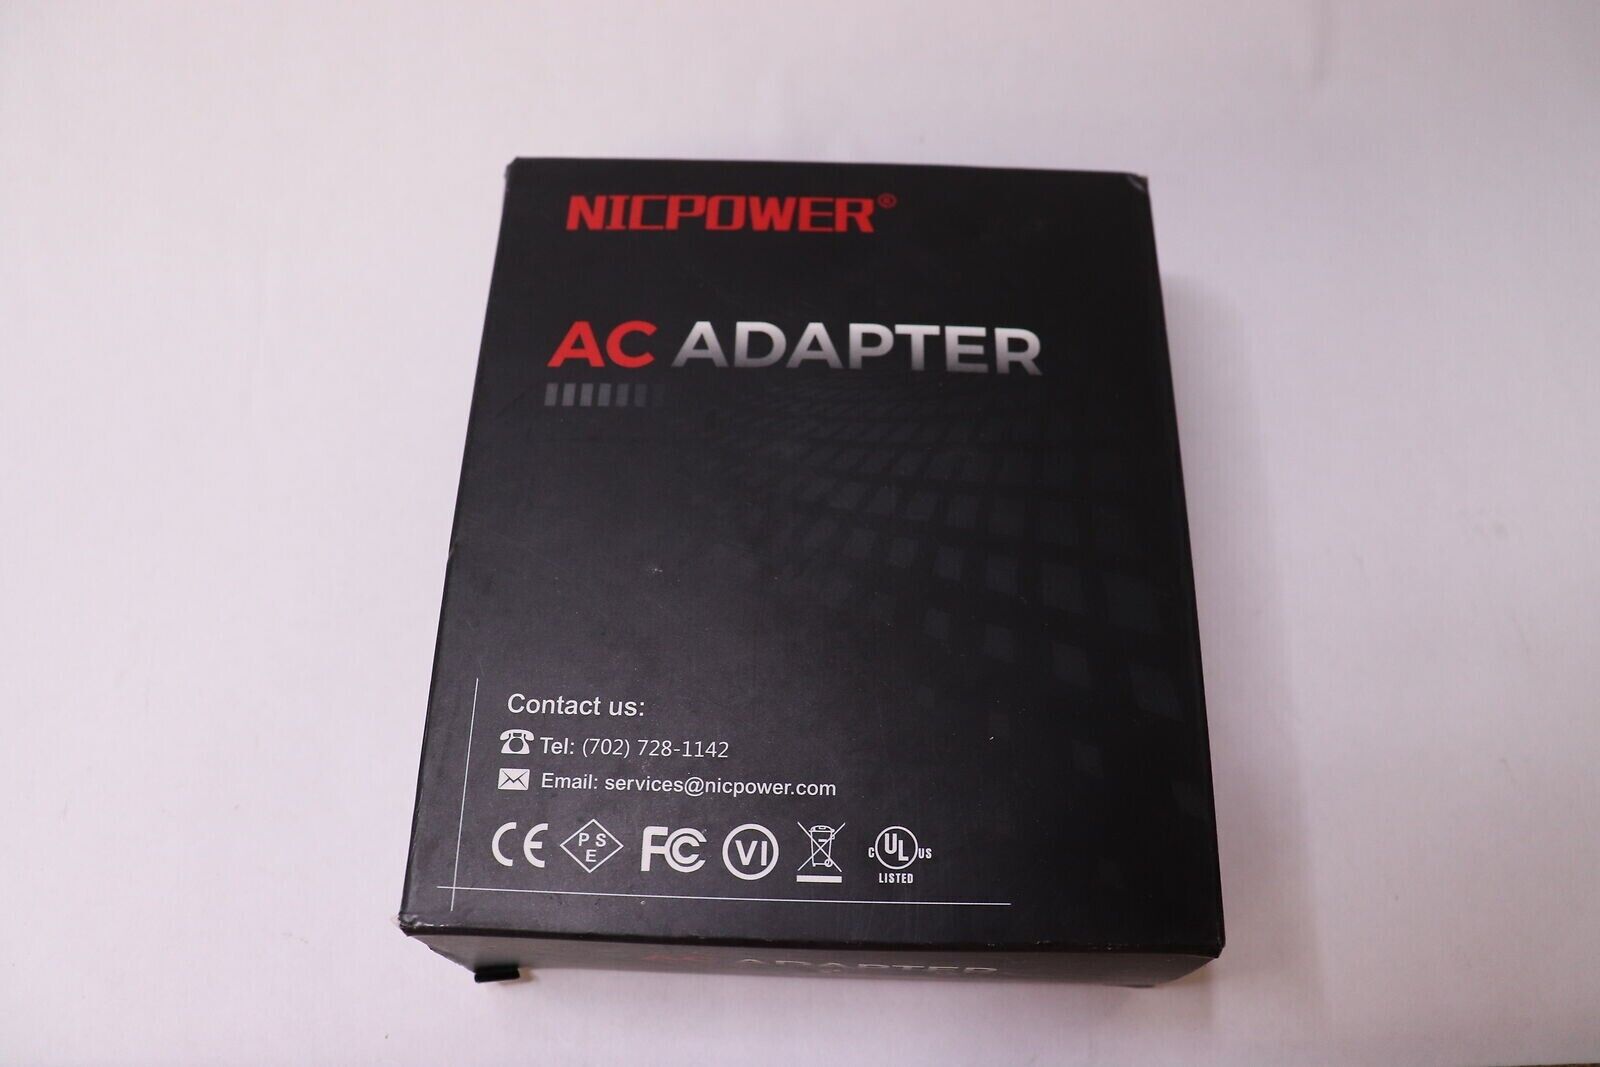 Nicpower AC Adapter